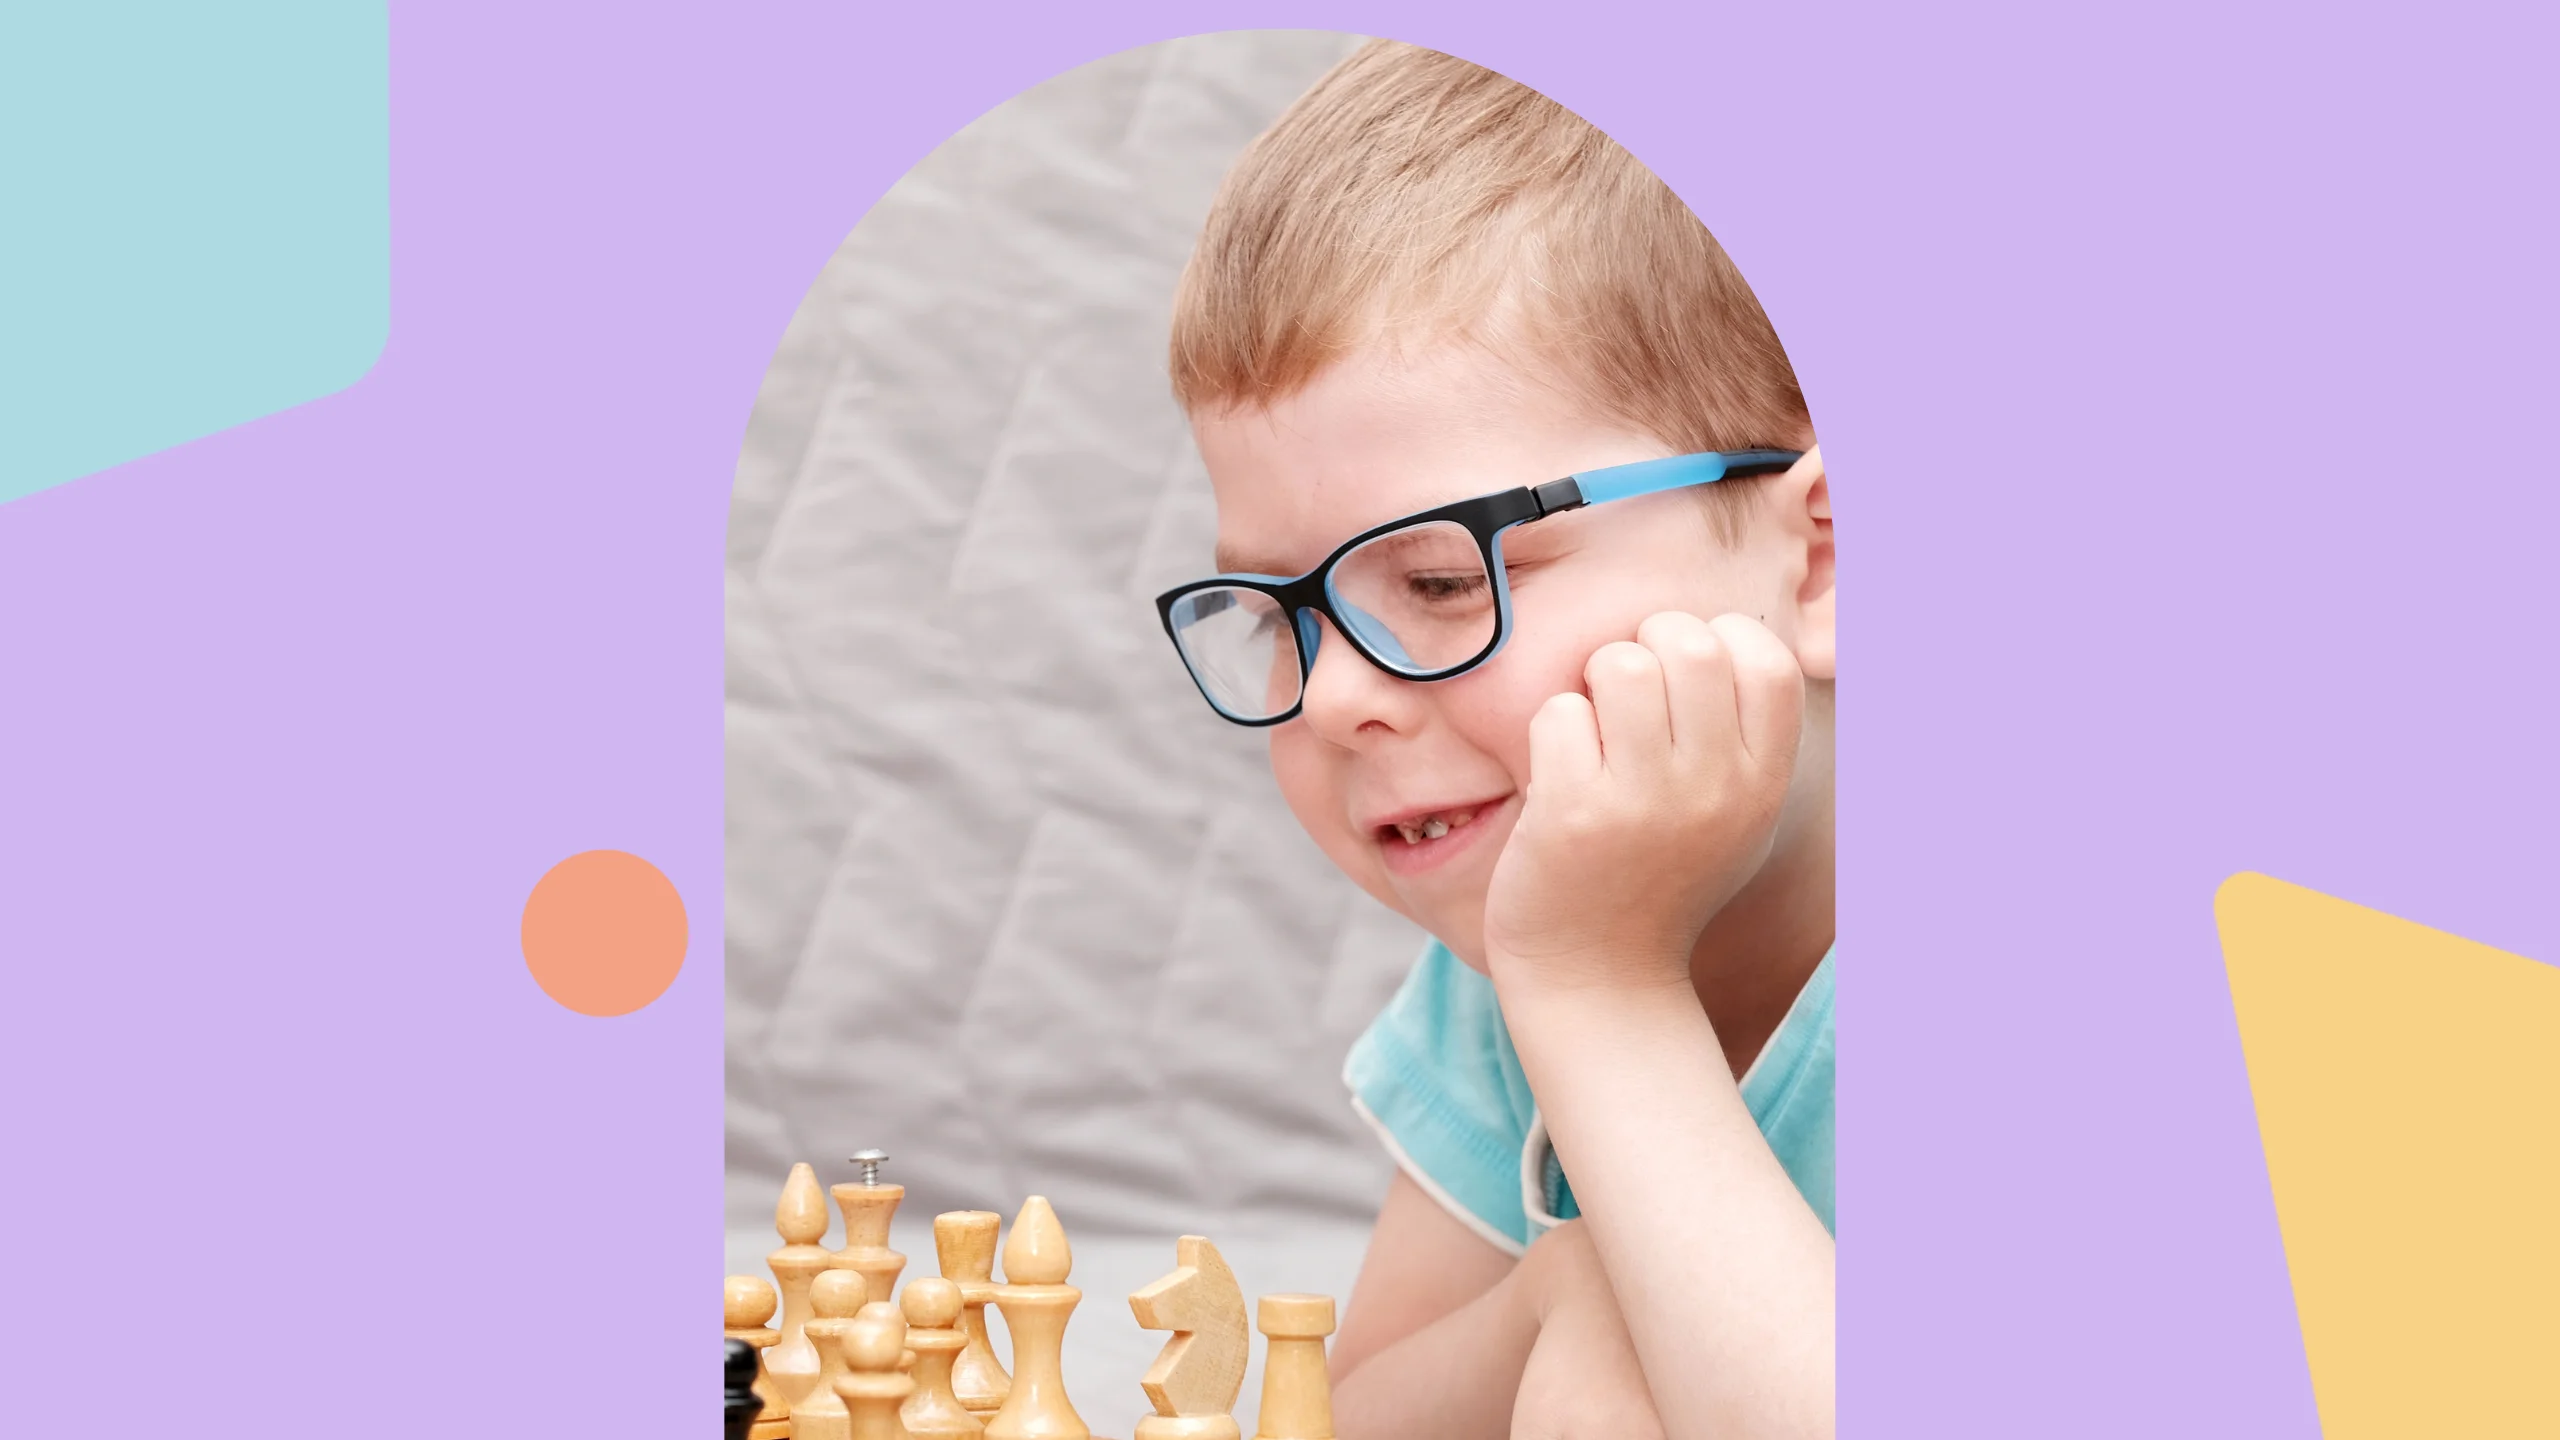 Jogar xadrez traz inúmeros benefícios cognitivos; Entenda quais